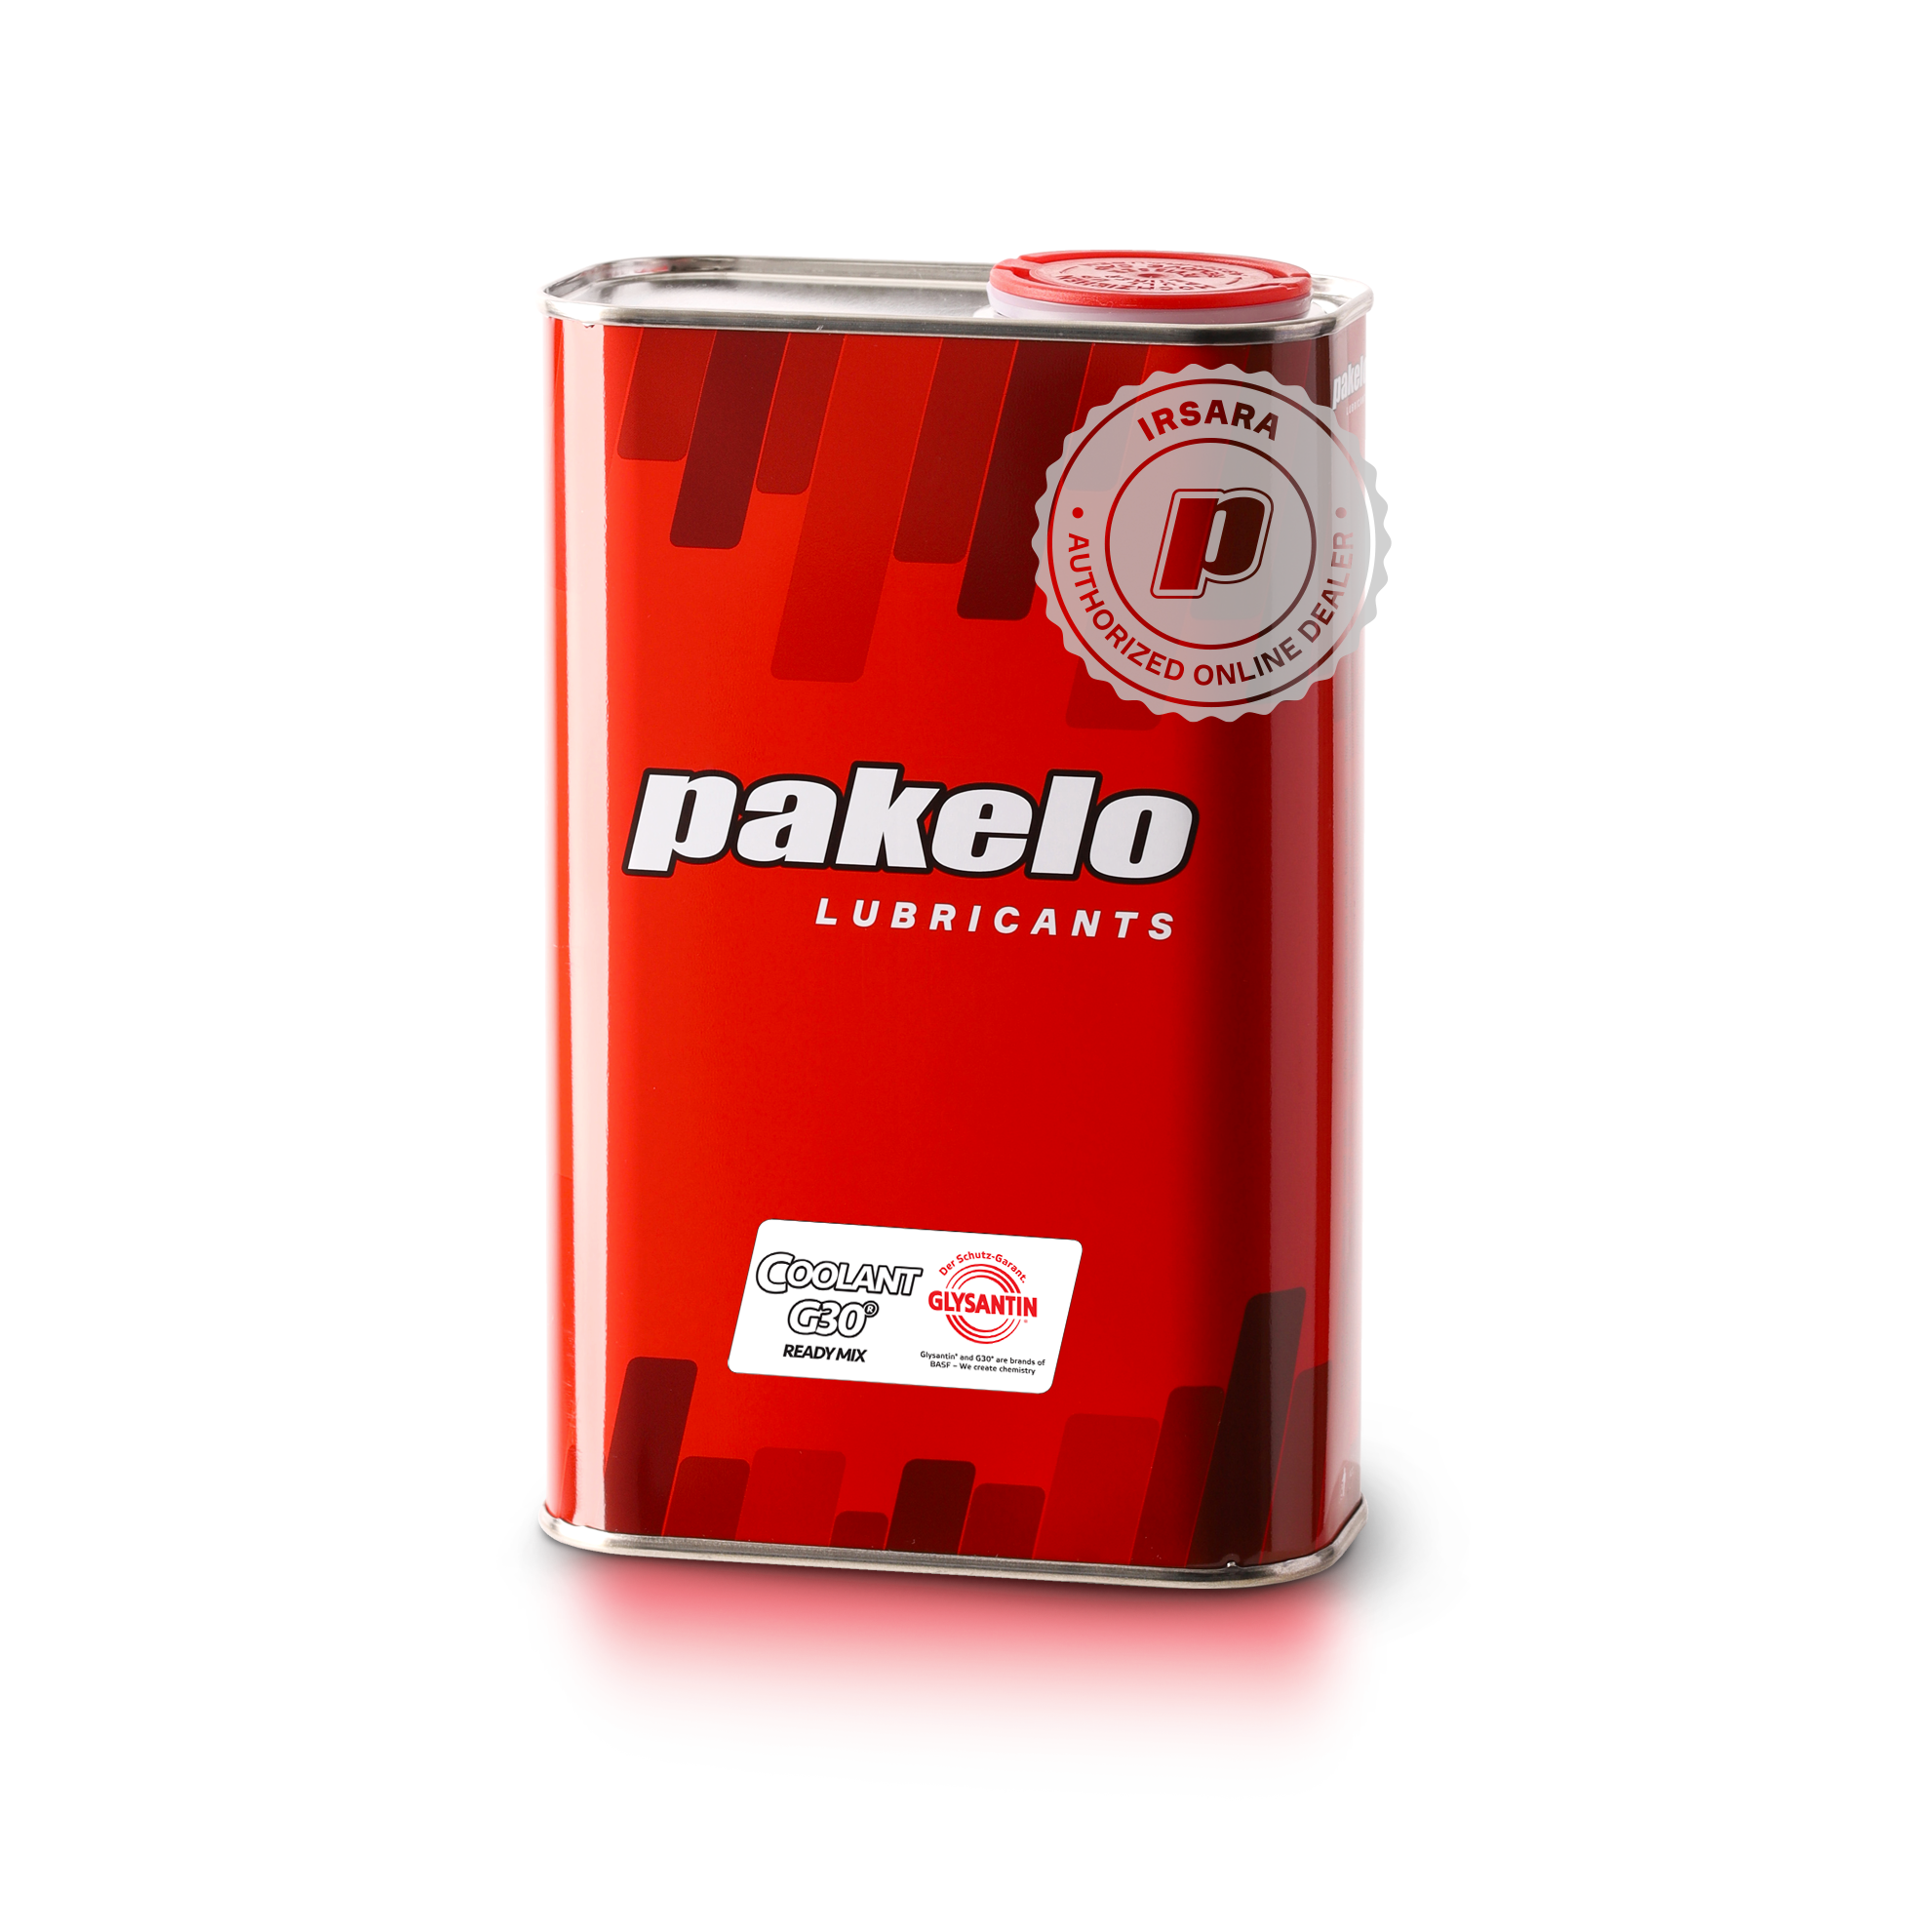 Pakelo Coolant G30 Ready Mix (1Lt)